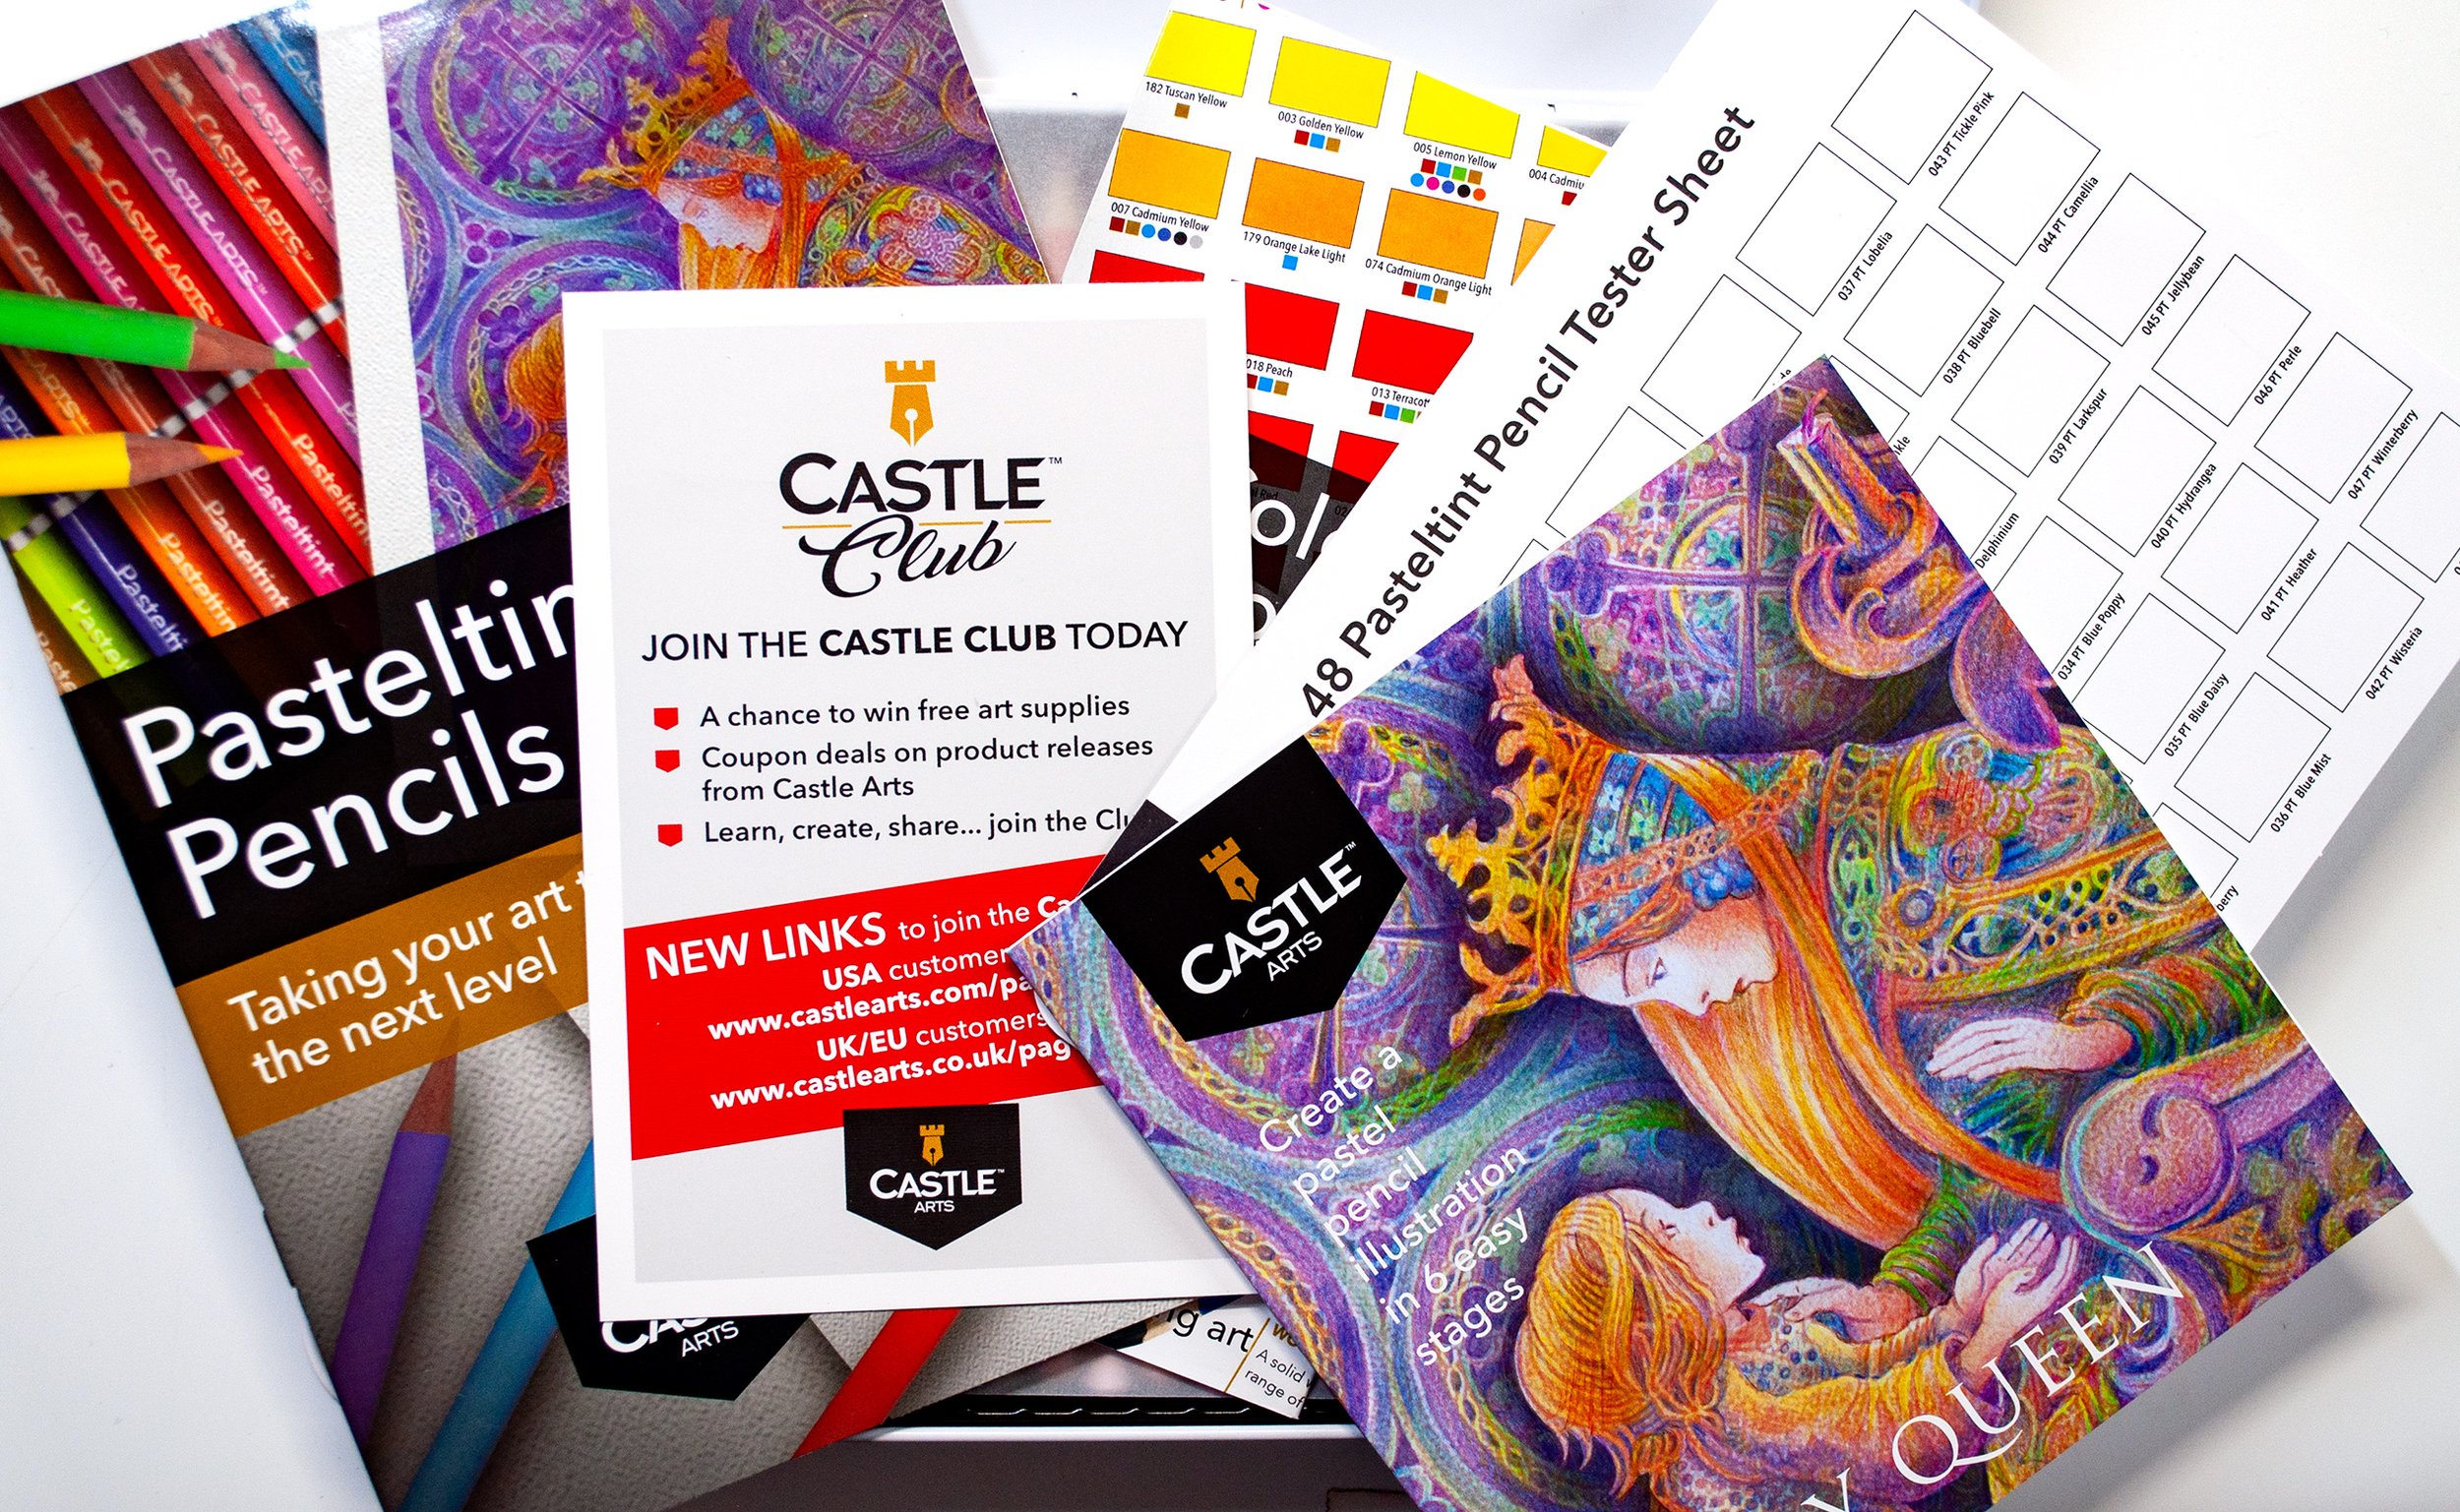 Tri-Tone Workbook  Castle Arts™ Soft Touch & Pasteltint Colored Pencils